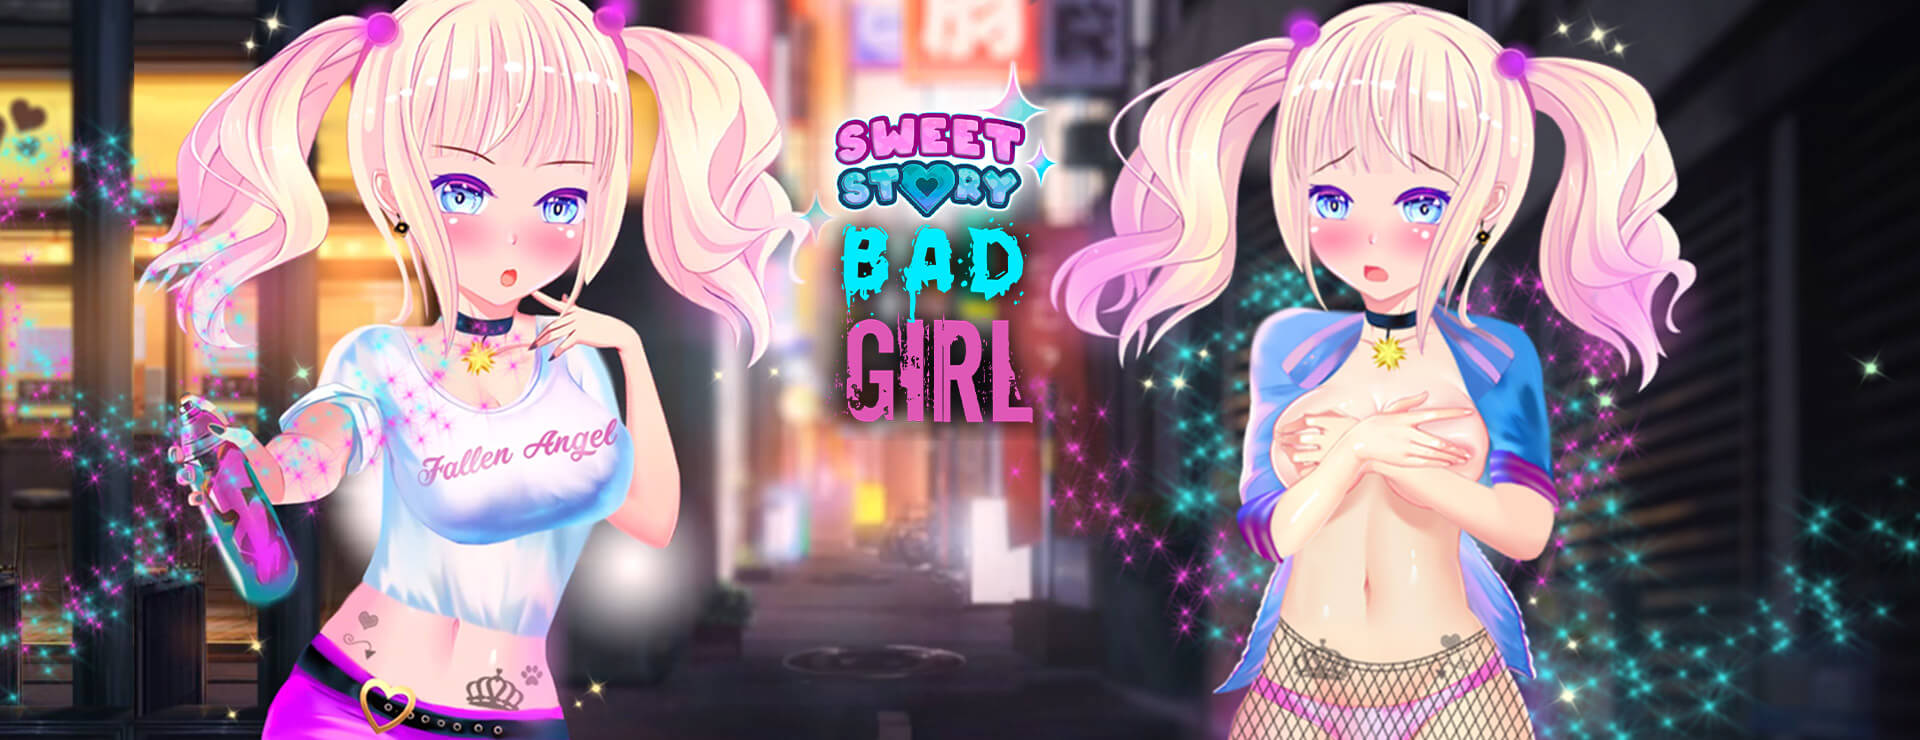 Sweet Story Bad Girl - Zwanglos  Spiel